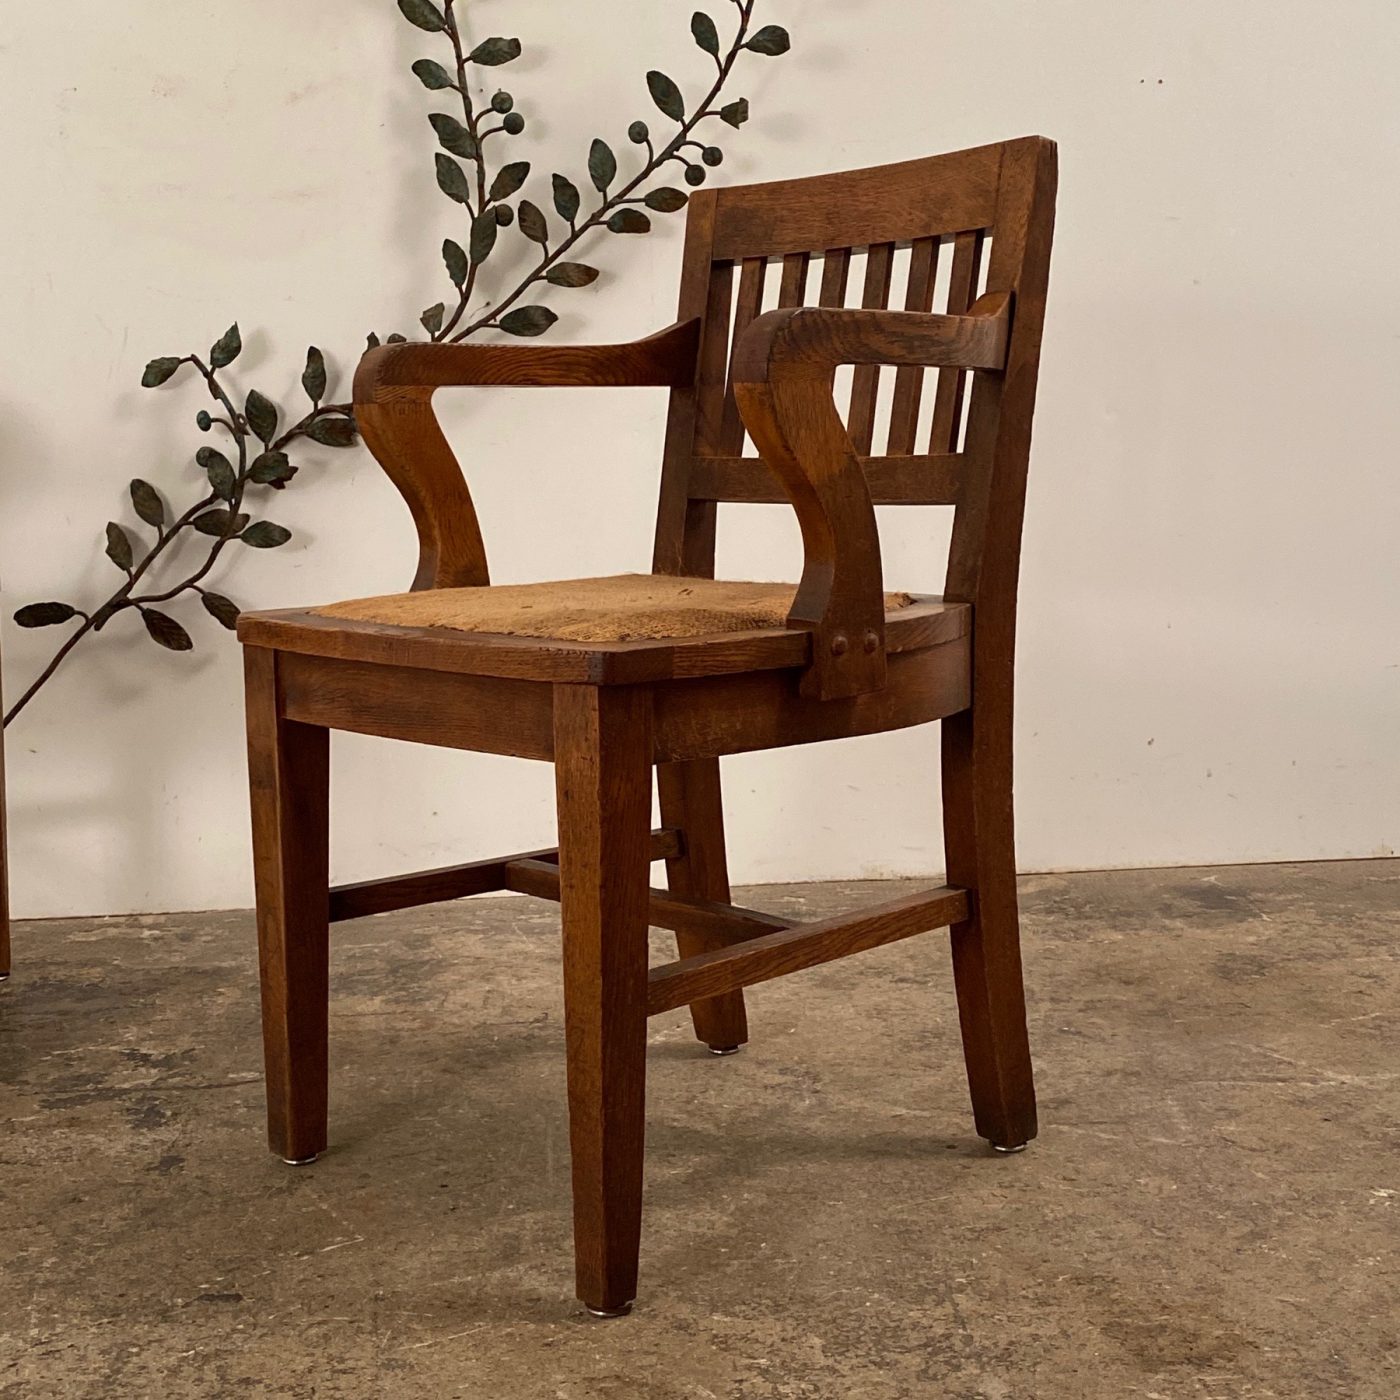 objet-vagabond-oak-chairs0003